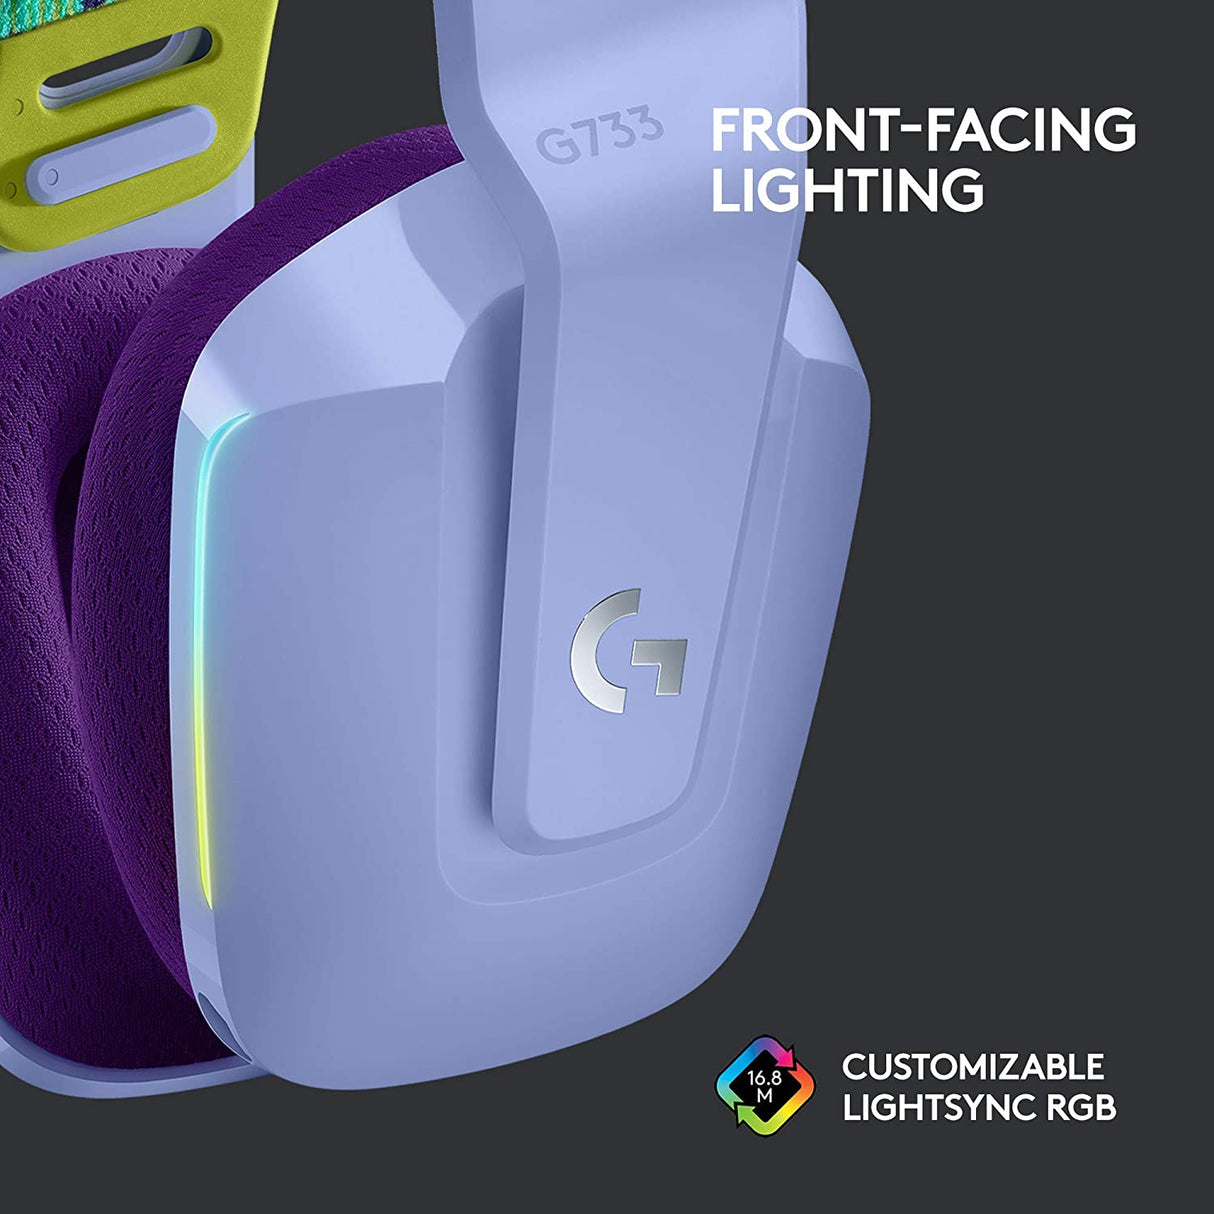 Logitech G733 LIGHTSPEED Wireless RGB Gaming Headset